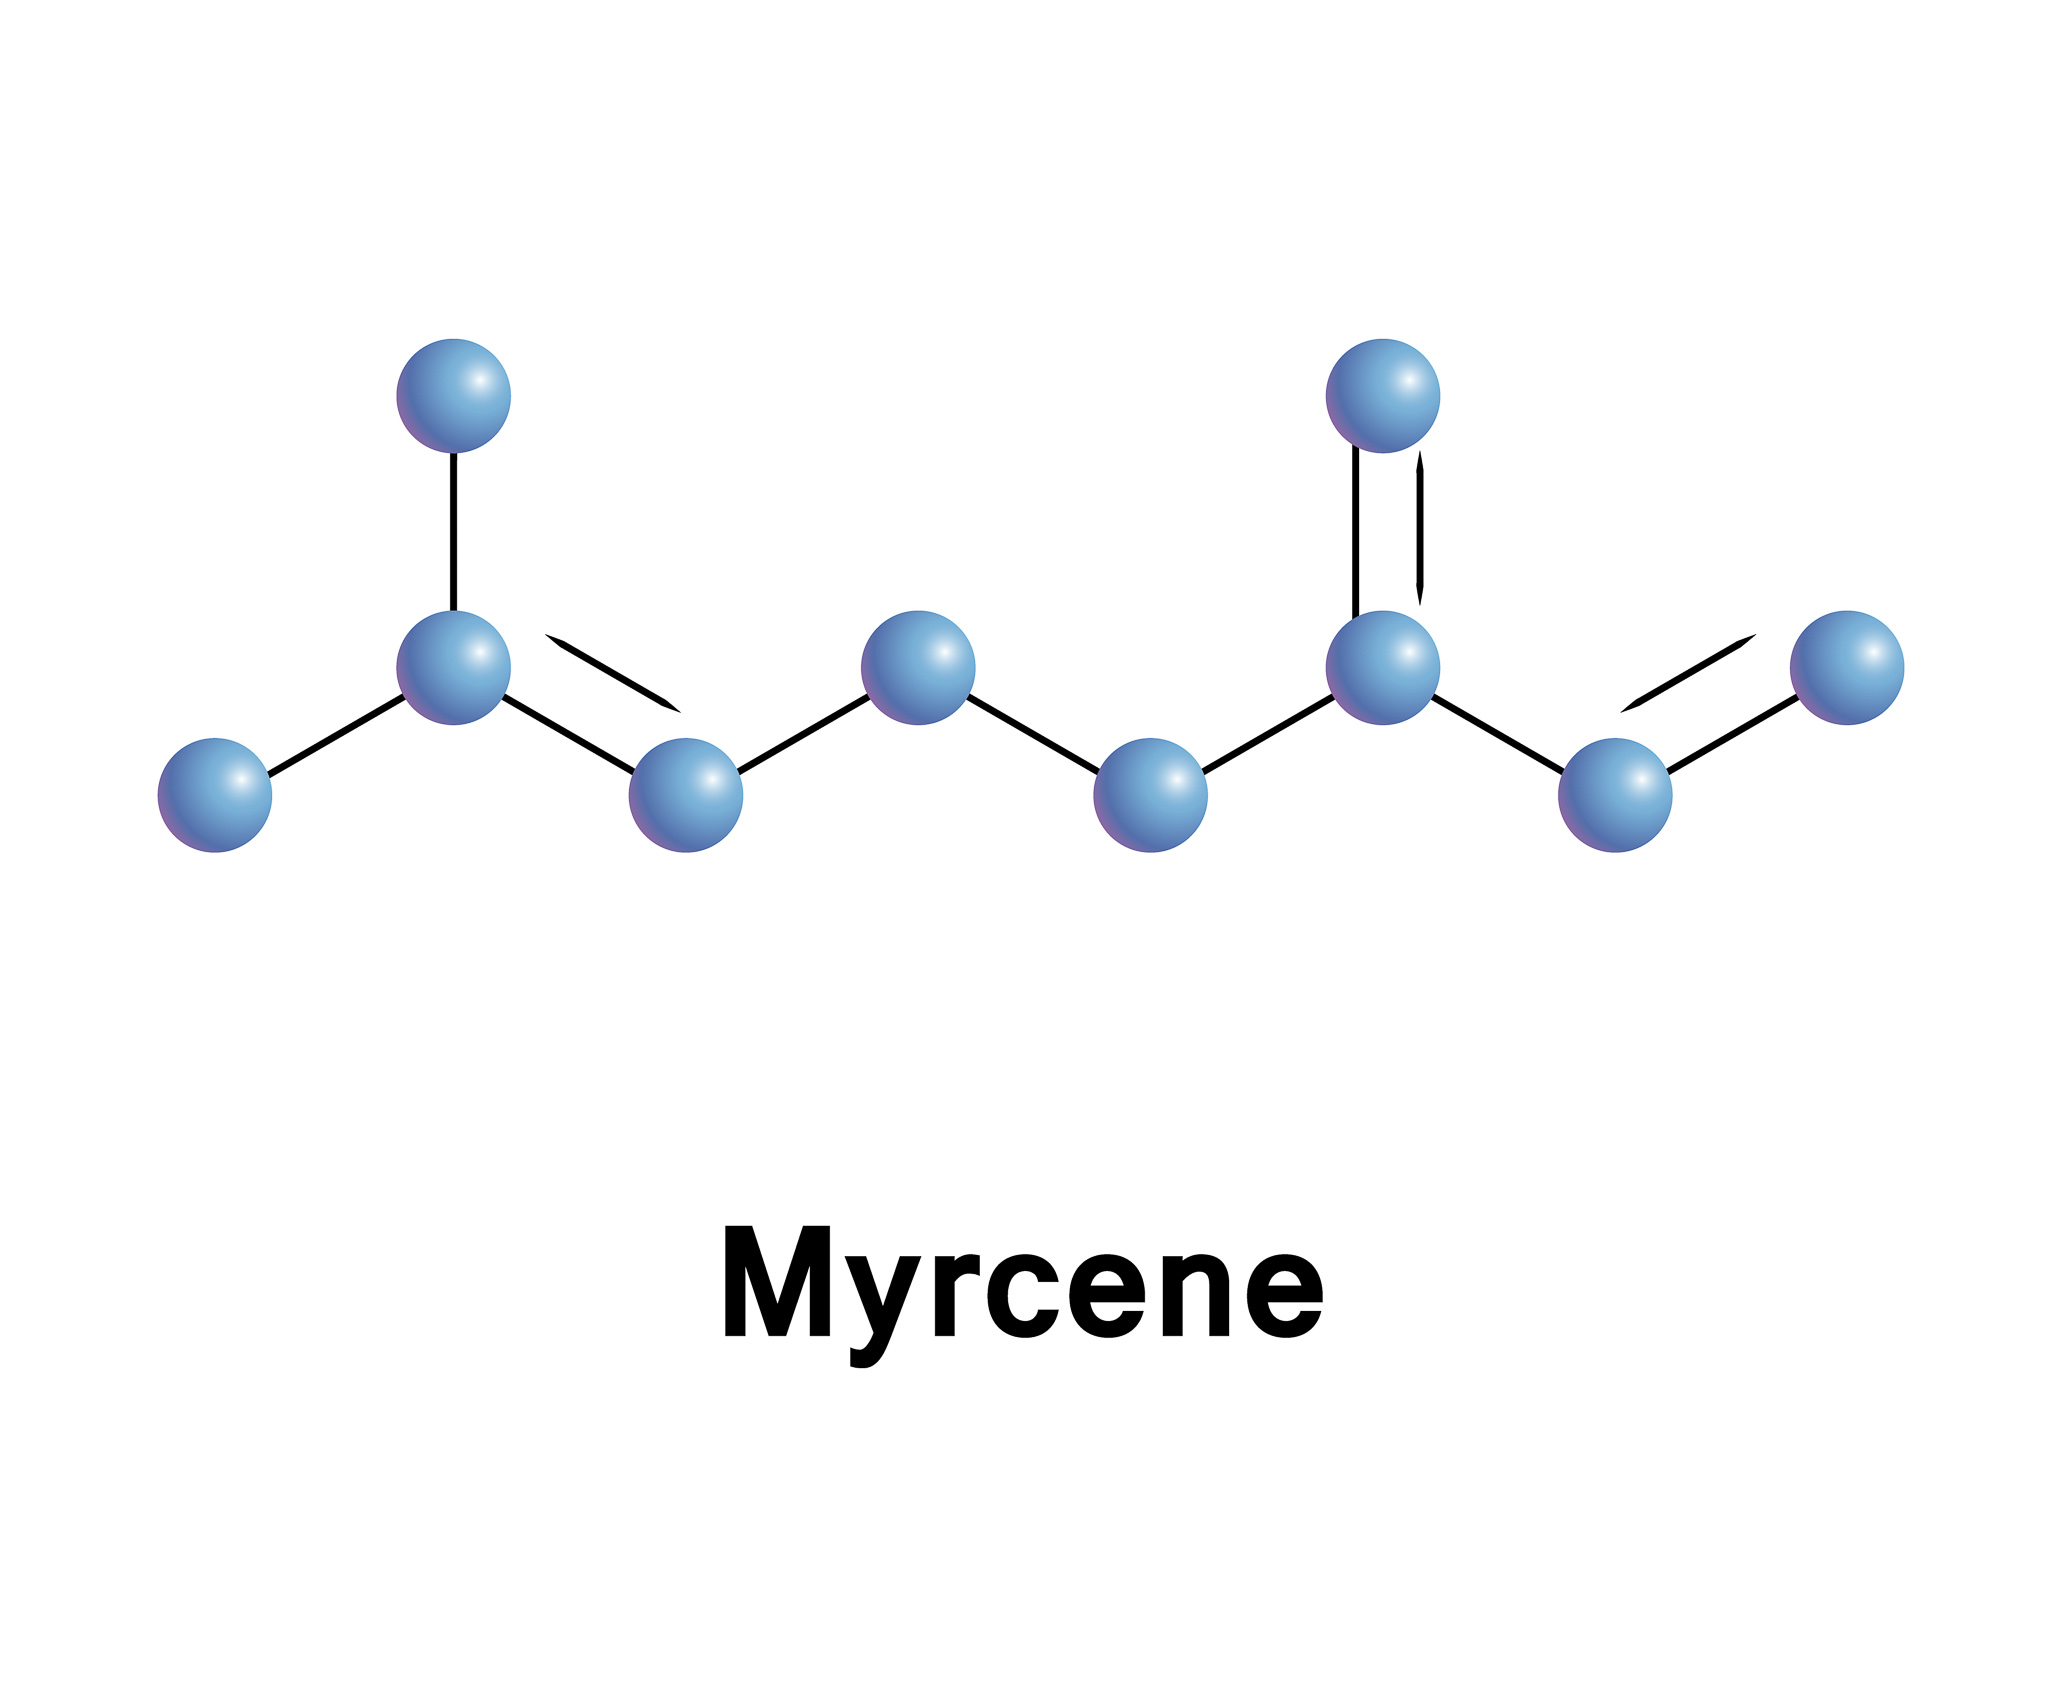 Myrcene is a terpene found in both hops and cannabis